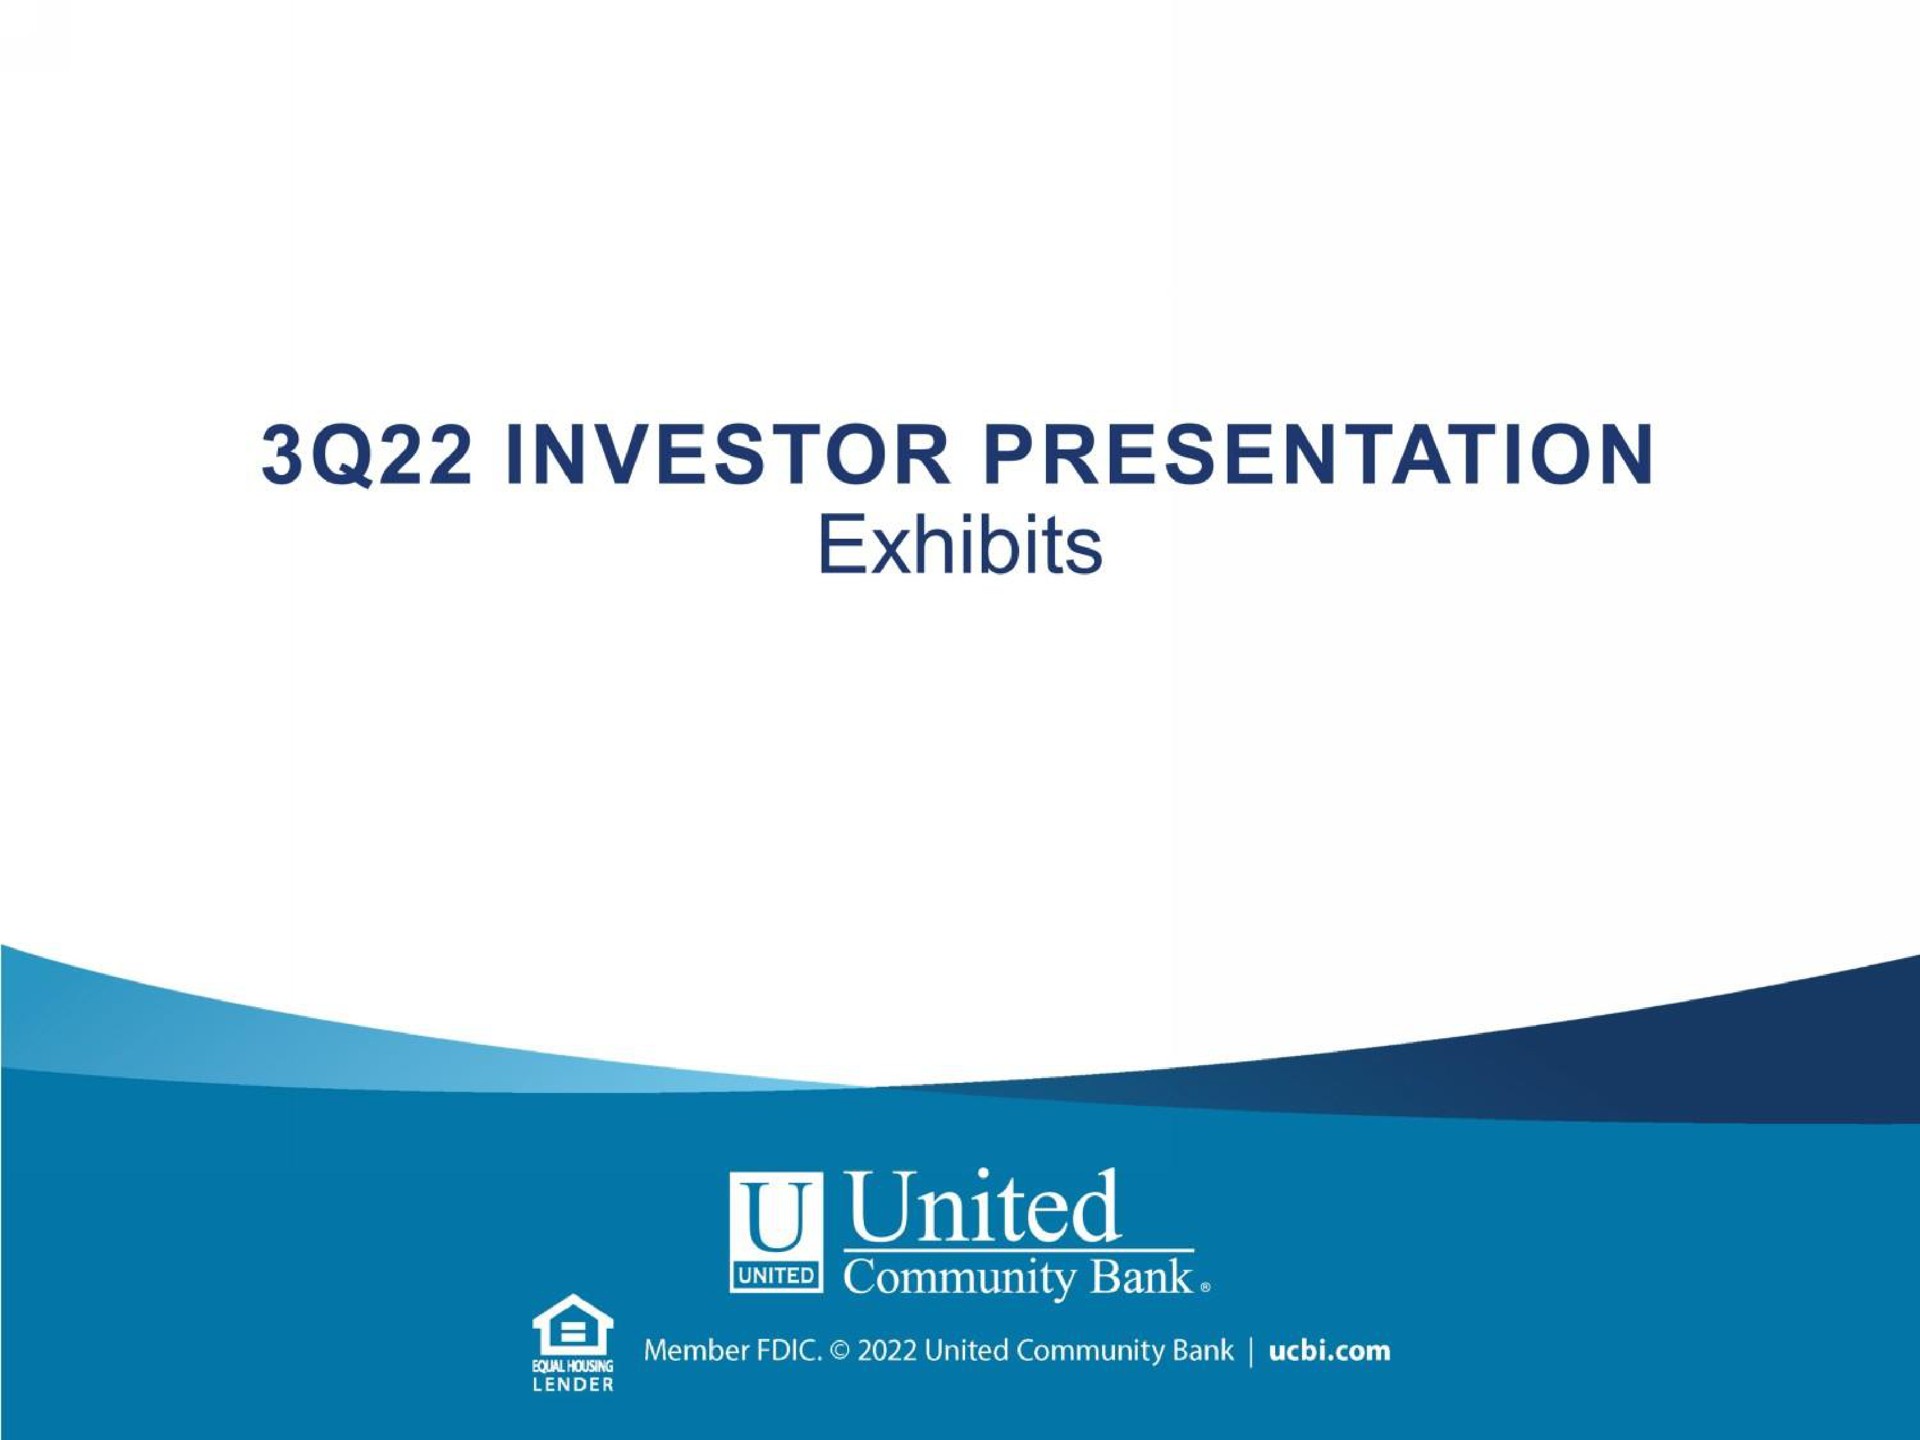 investor presentation exhibits united community bank | United Community Banks